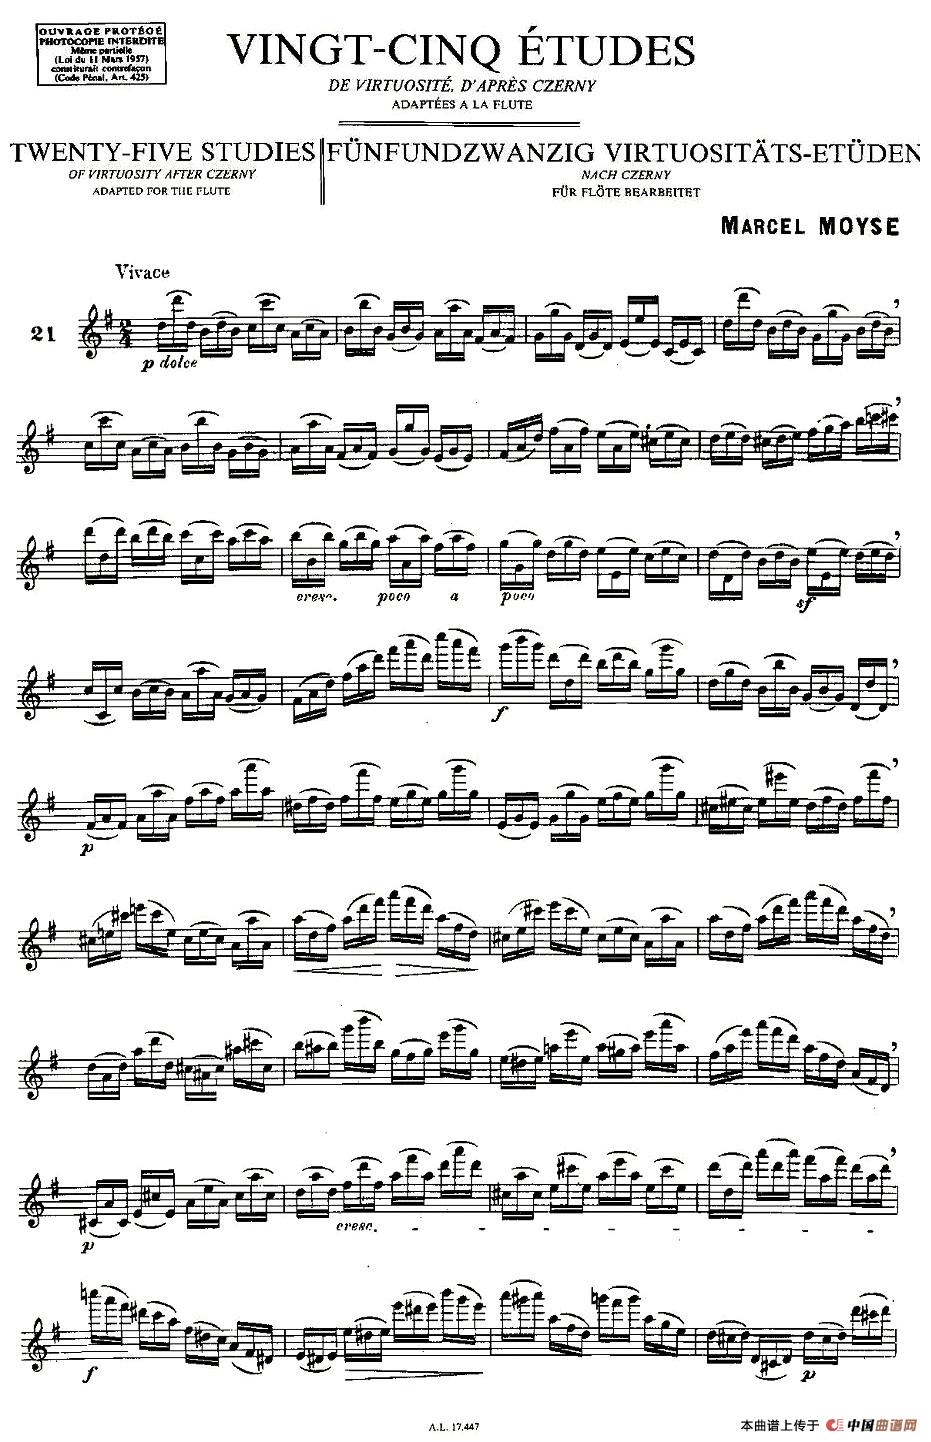 Moyse - 25 Studies after Czerny flute 之21（25首改编自车